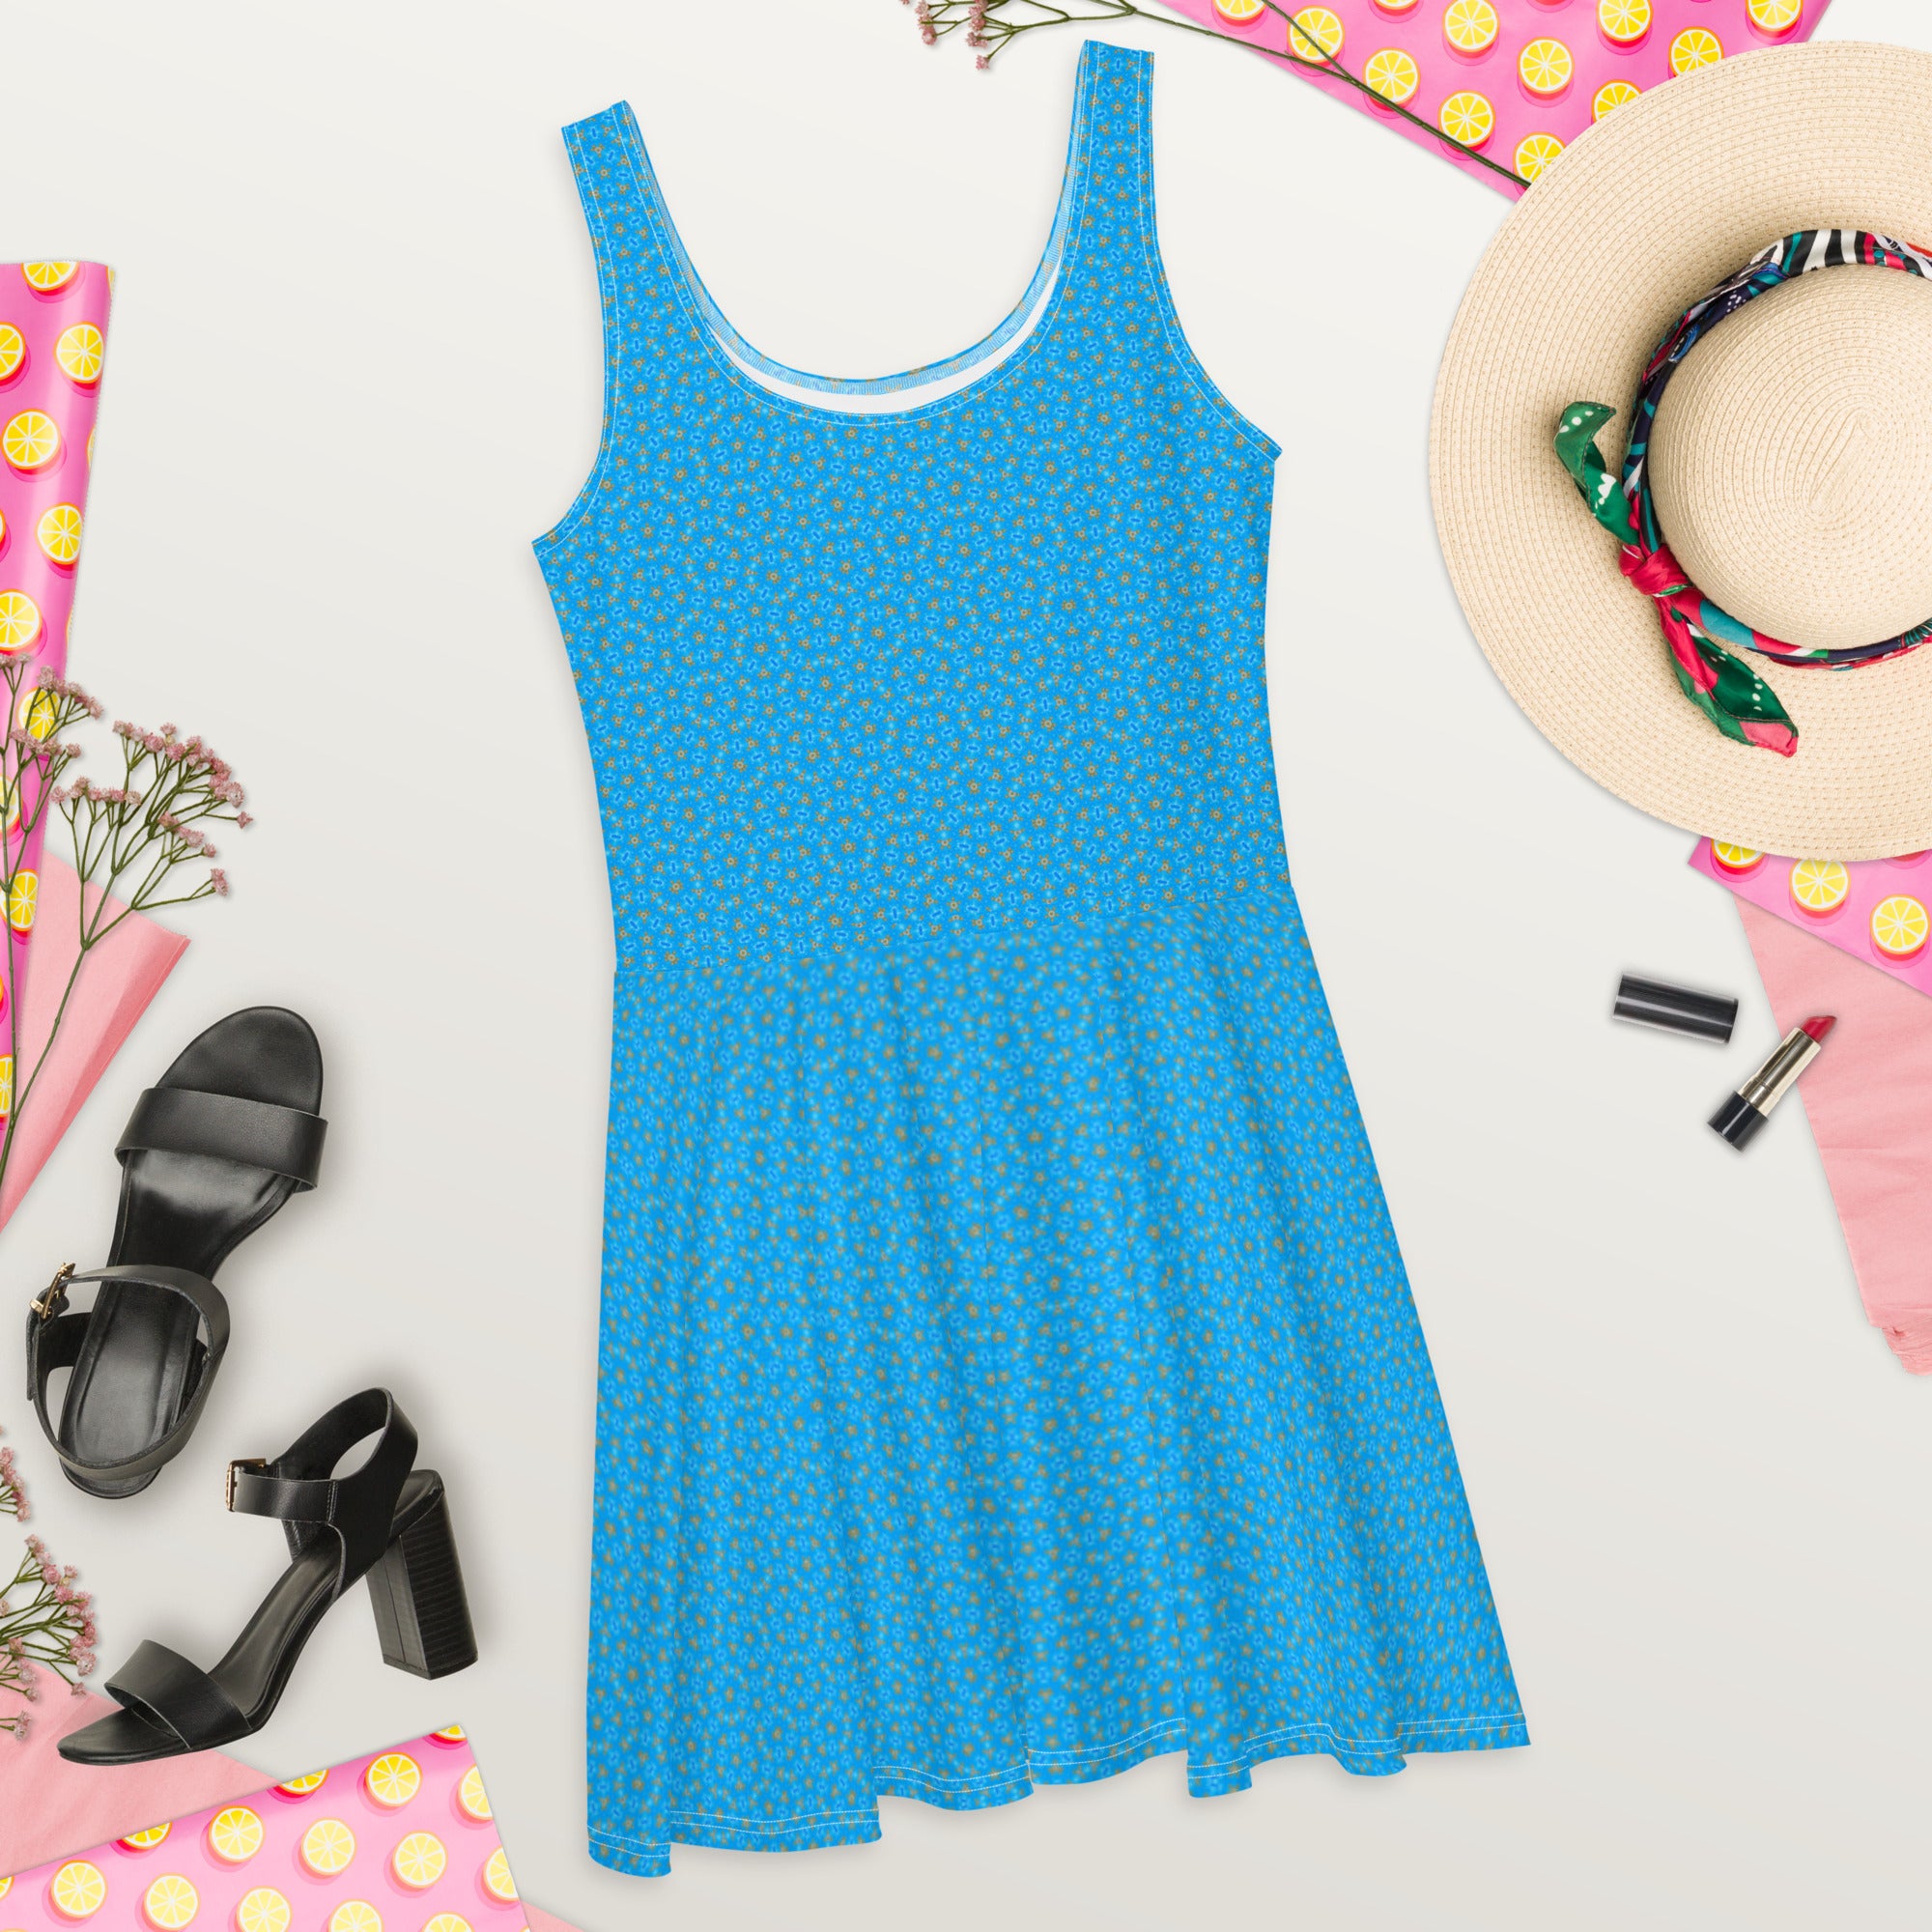 Atlantic Summer Blue rosy patterned Skater Dress, by Sensus Studio Design